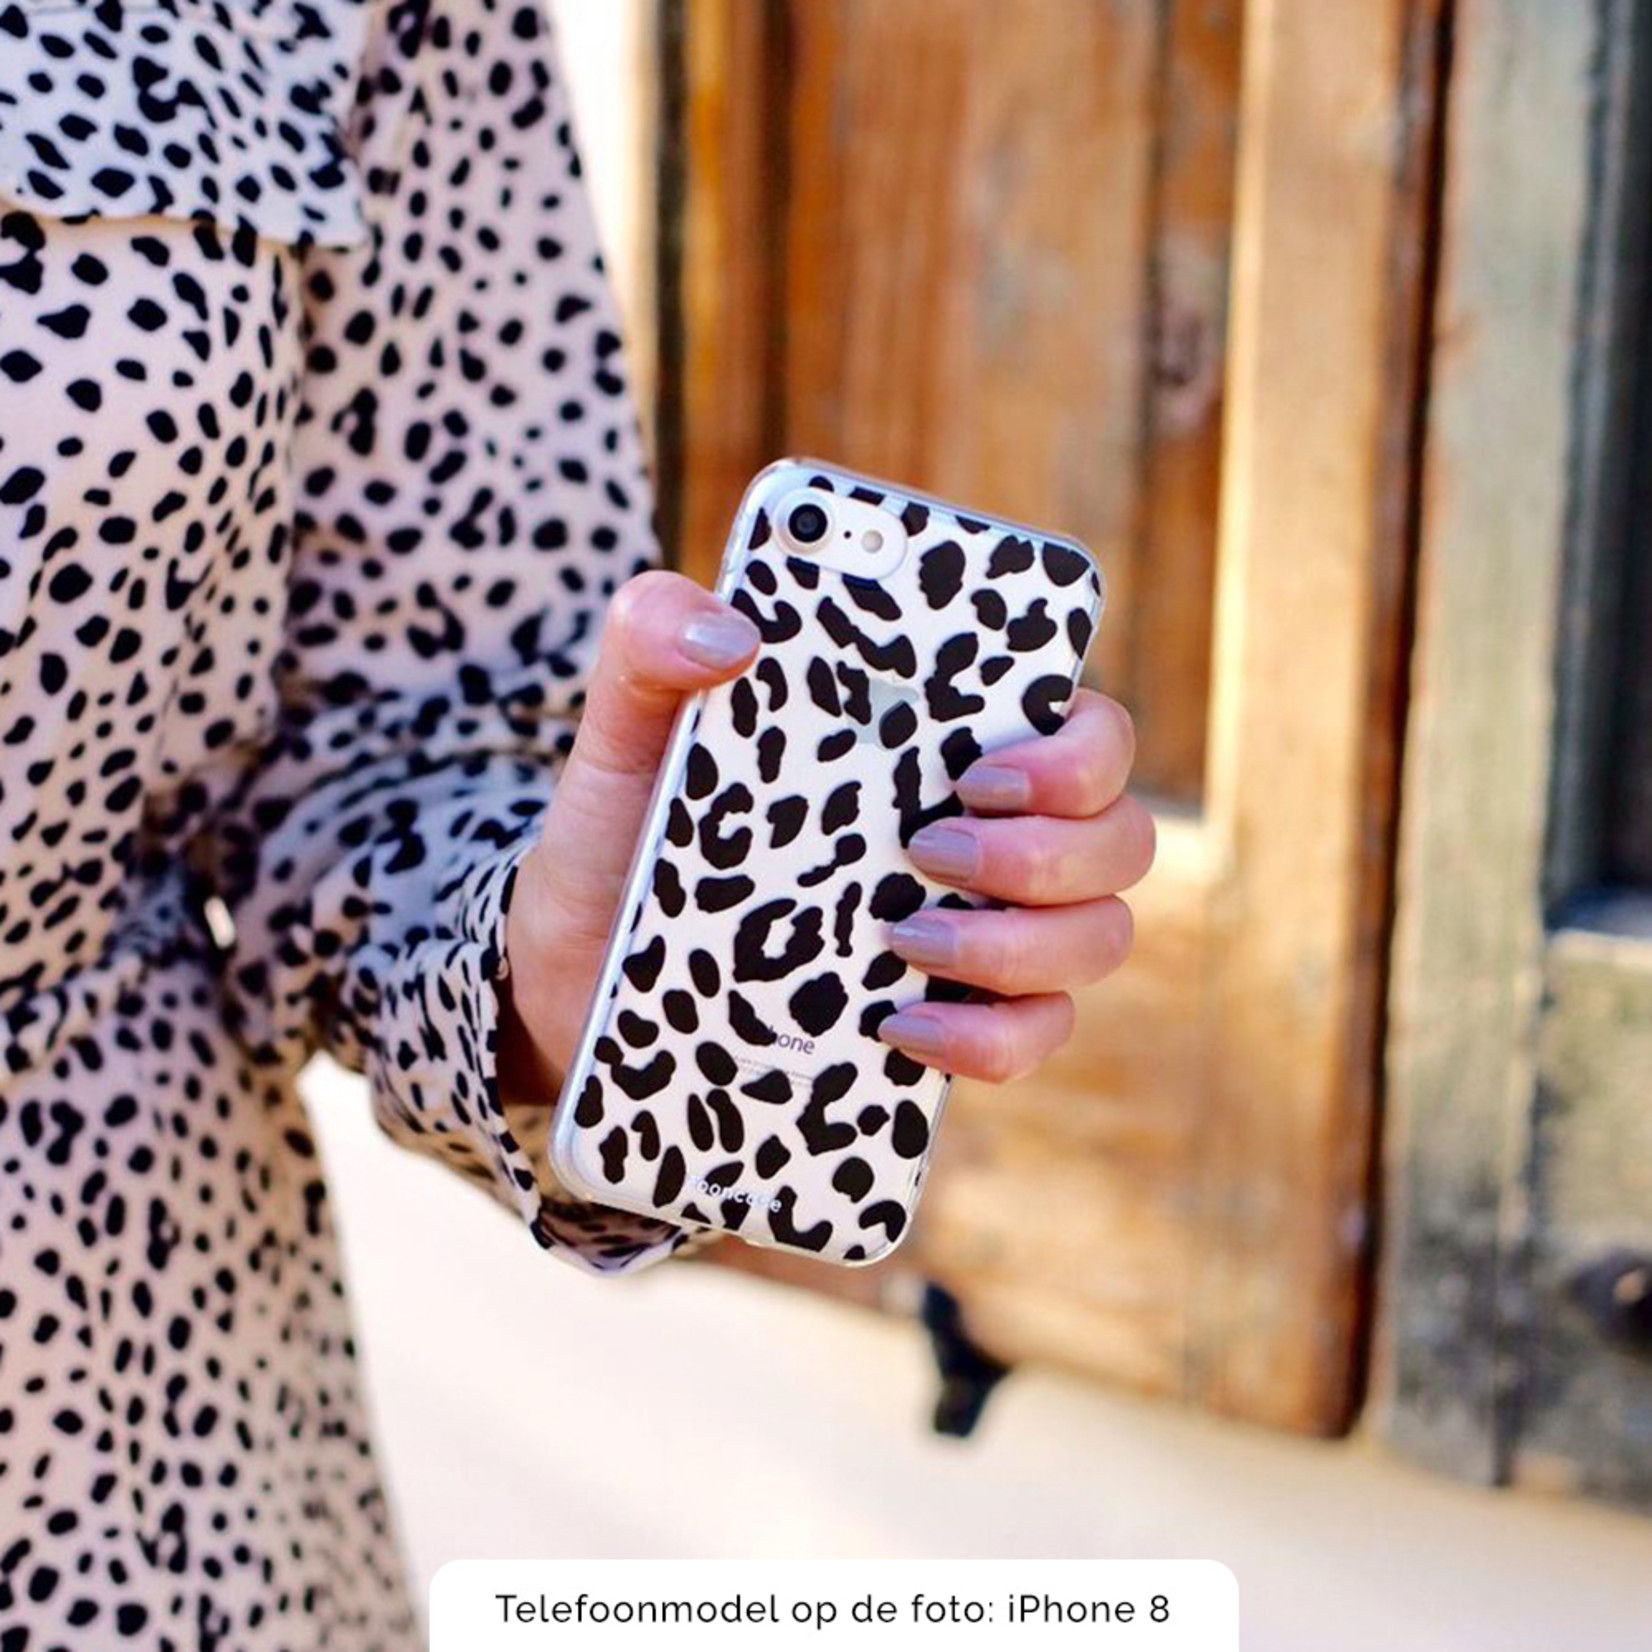 FOONCASE Iphone XS Max Case - Leopard